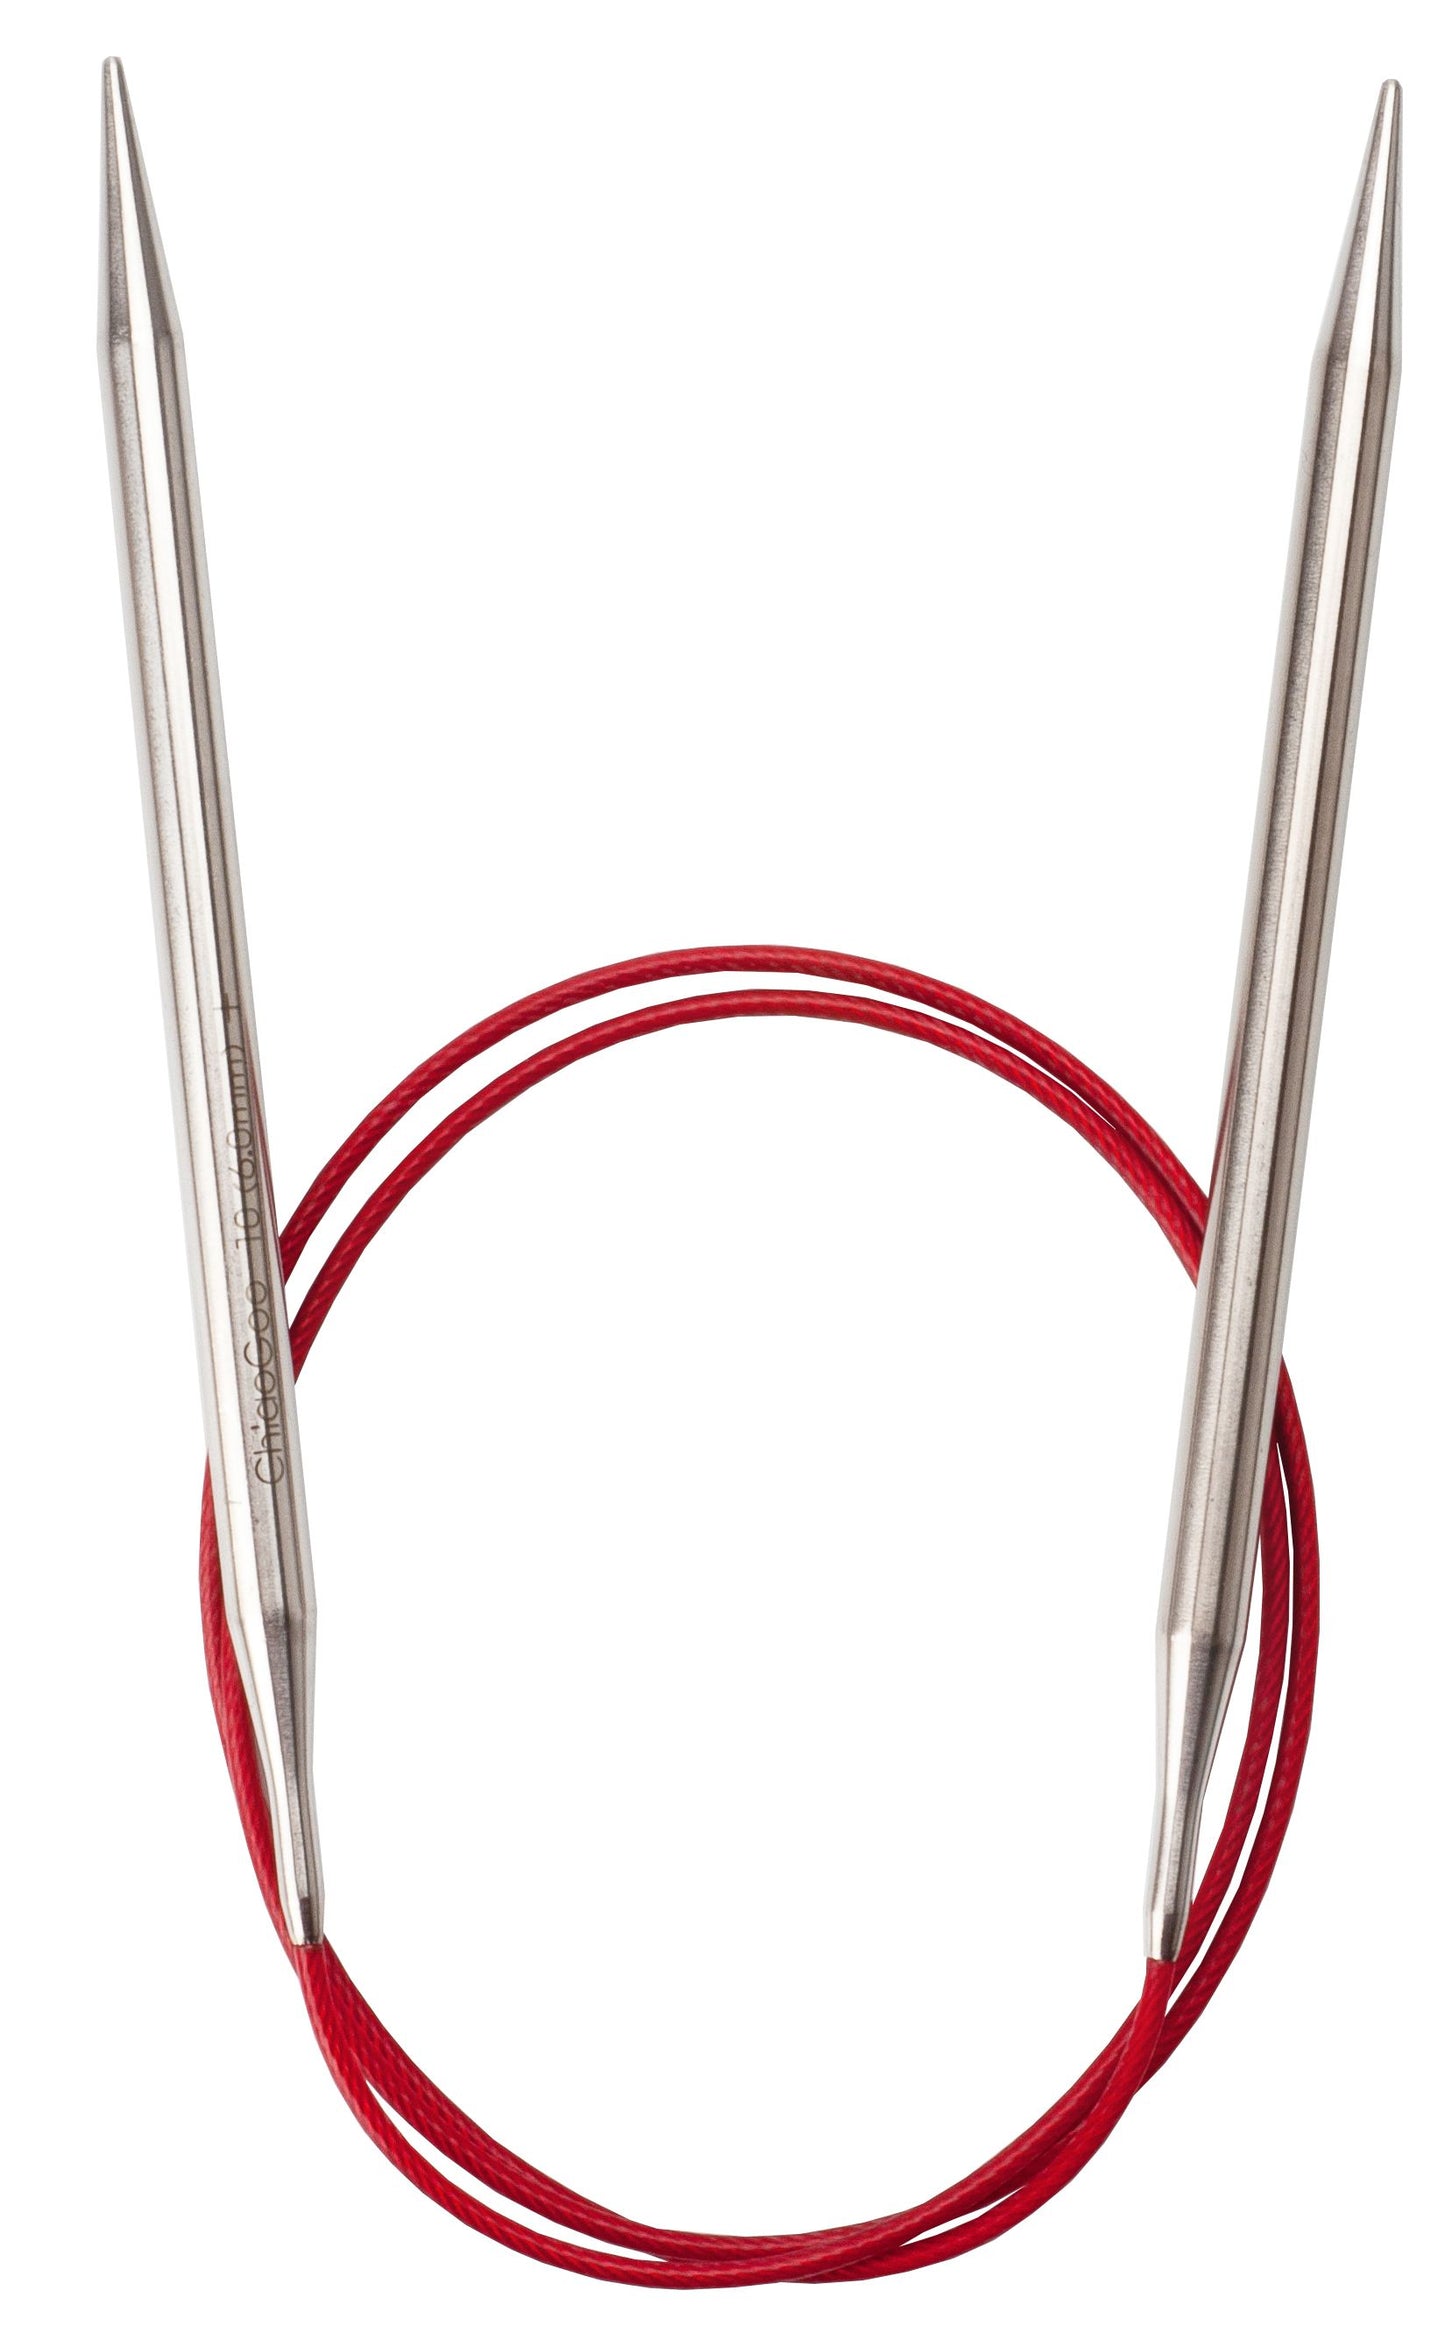 addi Turbo® LACE Circular Knitting Needles Skacel US 10.5 (6.5mm) 16 inch  40cm